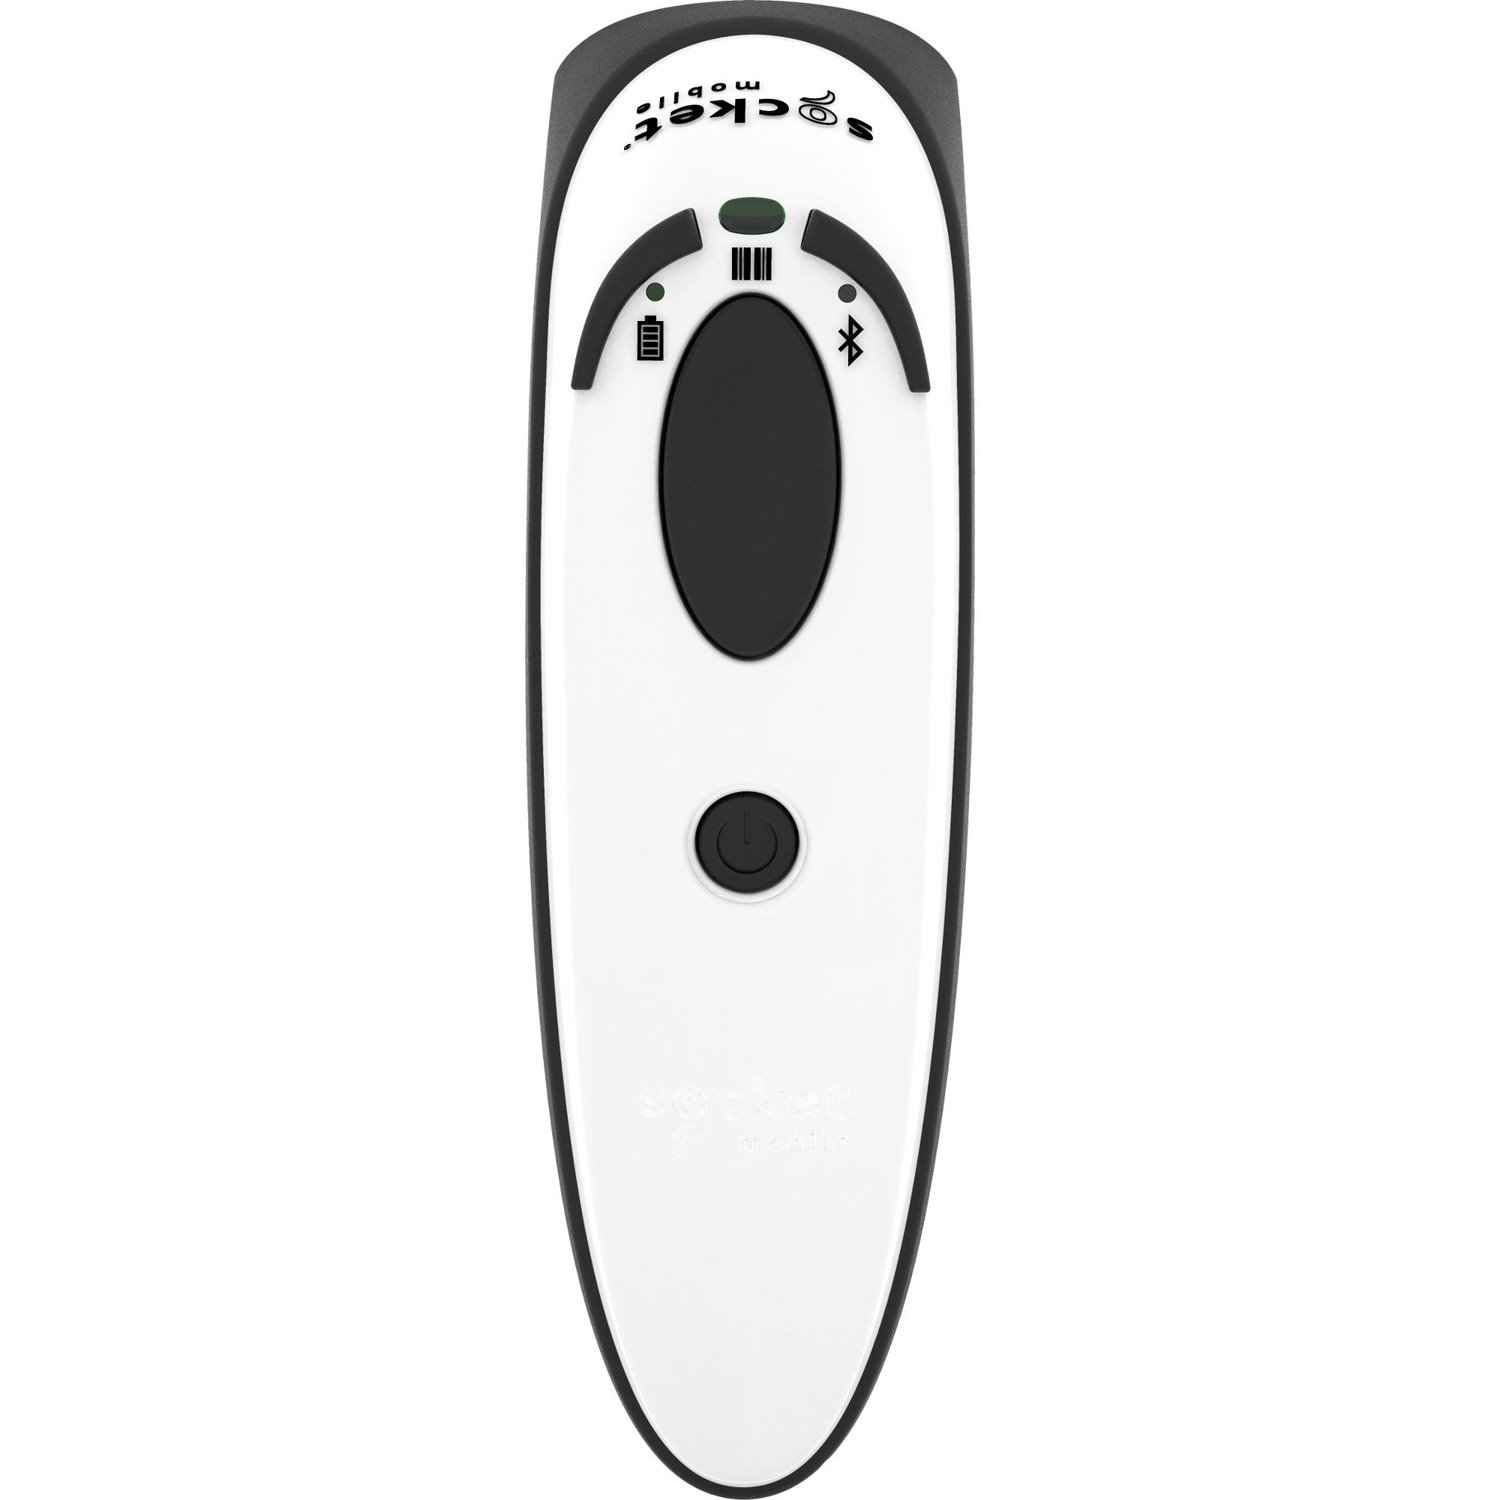 Socket Mobile DuraScan D730 Handheld Barcode Scanner - Wireless Connectivity - White